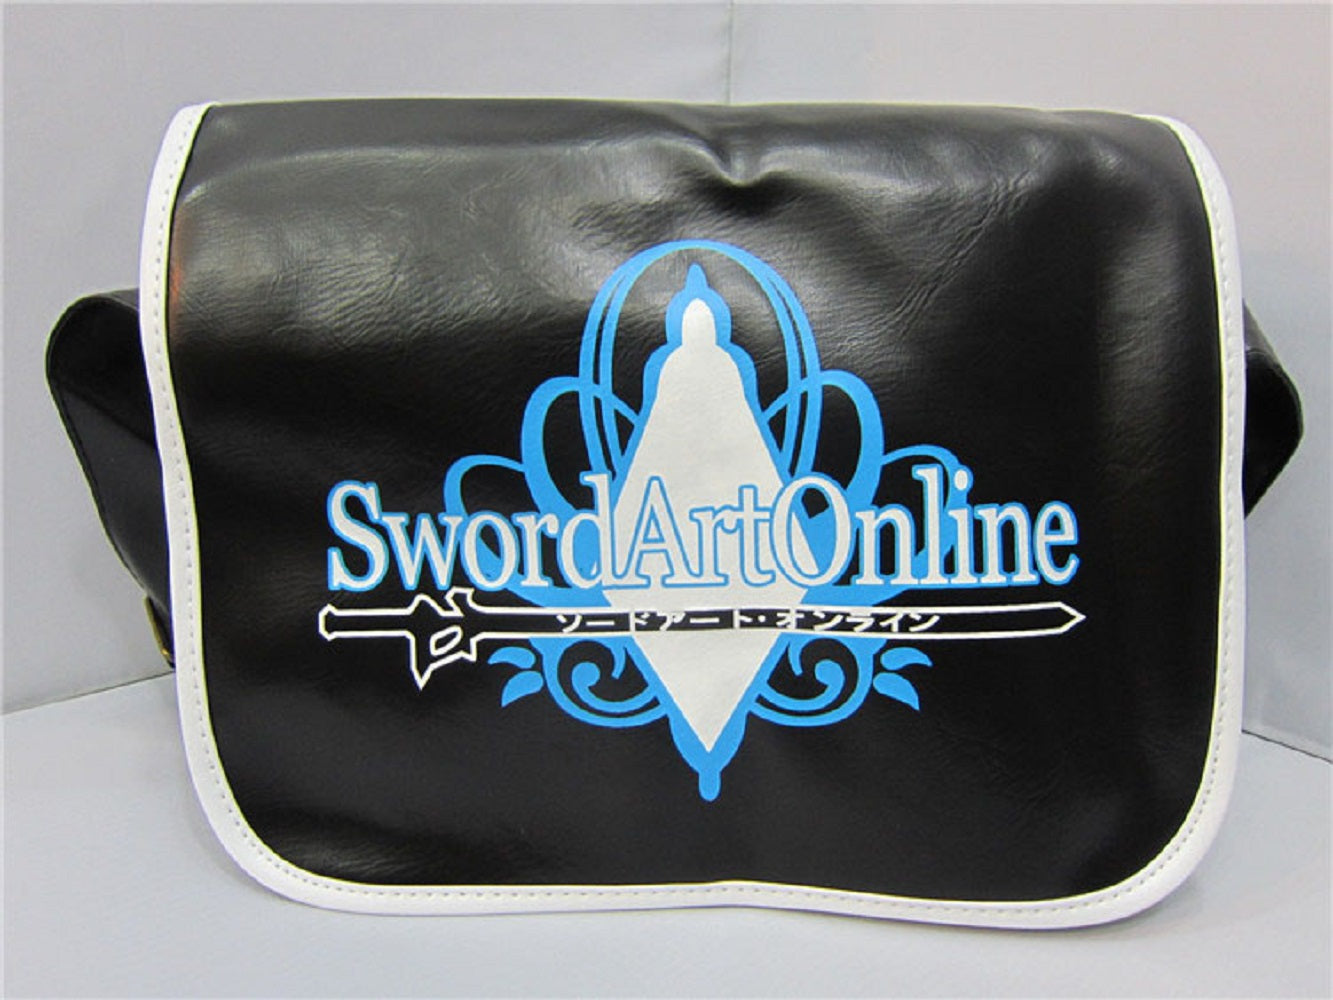 Sword Art Online Messenger Bag - Super Anime Store FREE SHIPPING FAST SHIPPING USA